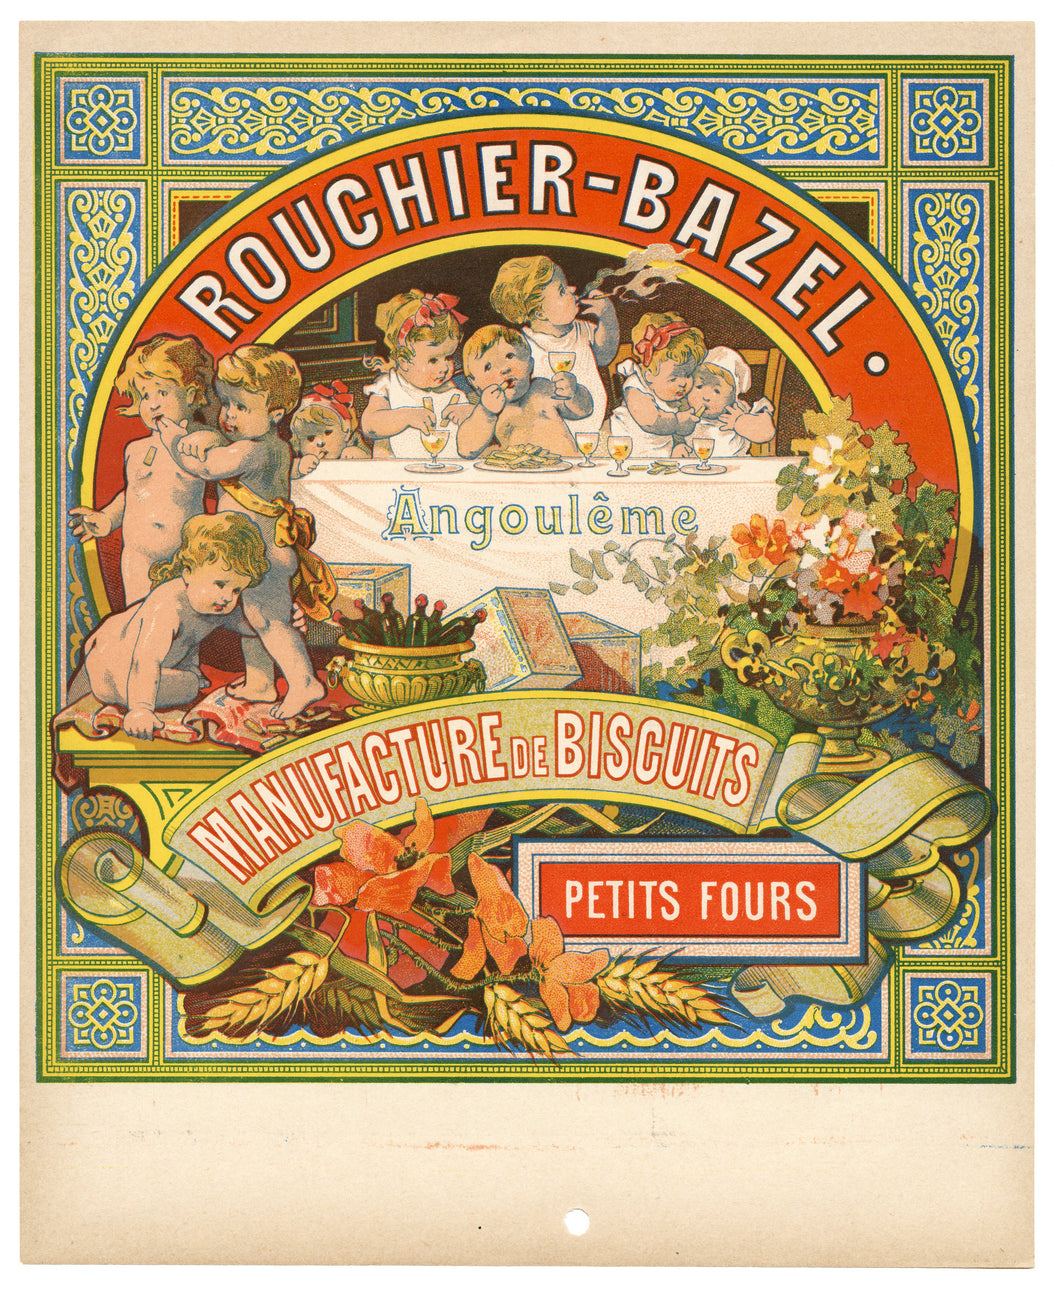 Vintage, French, Unused ROUCHIER-BAZEL Biscuit Cookie Label, Children Drinking and Smoking